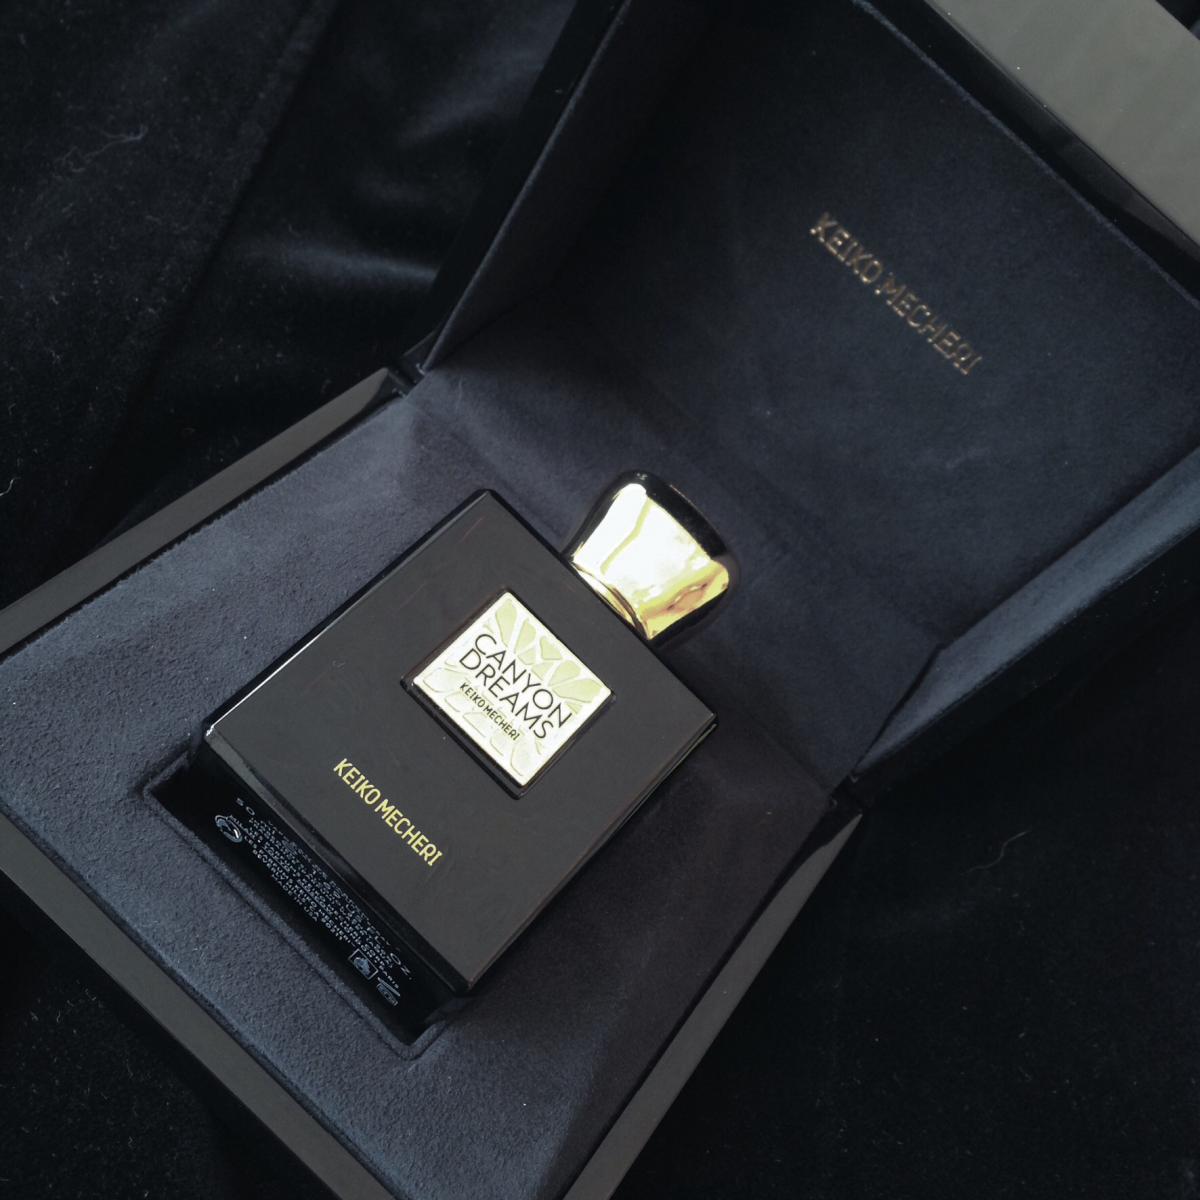 Canyon Dreams Keiko Mecheri perfume - a fragrance for women and men 2012